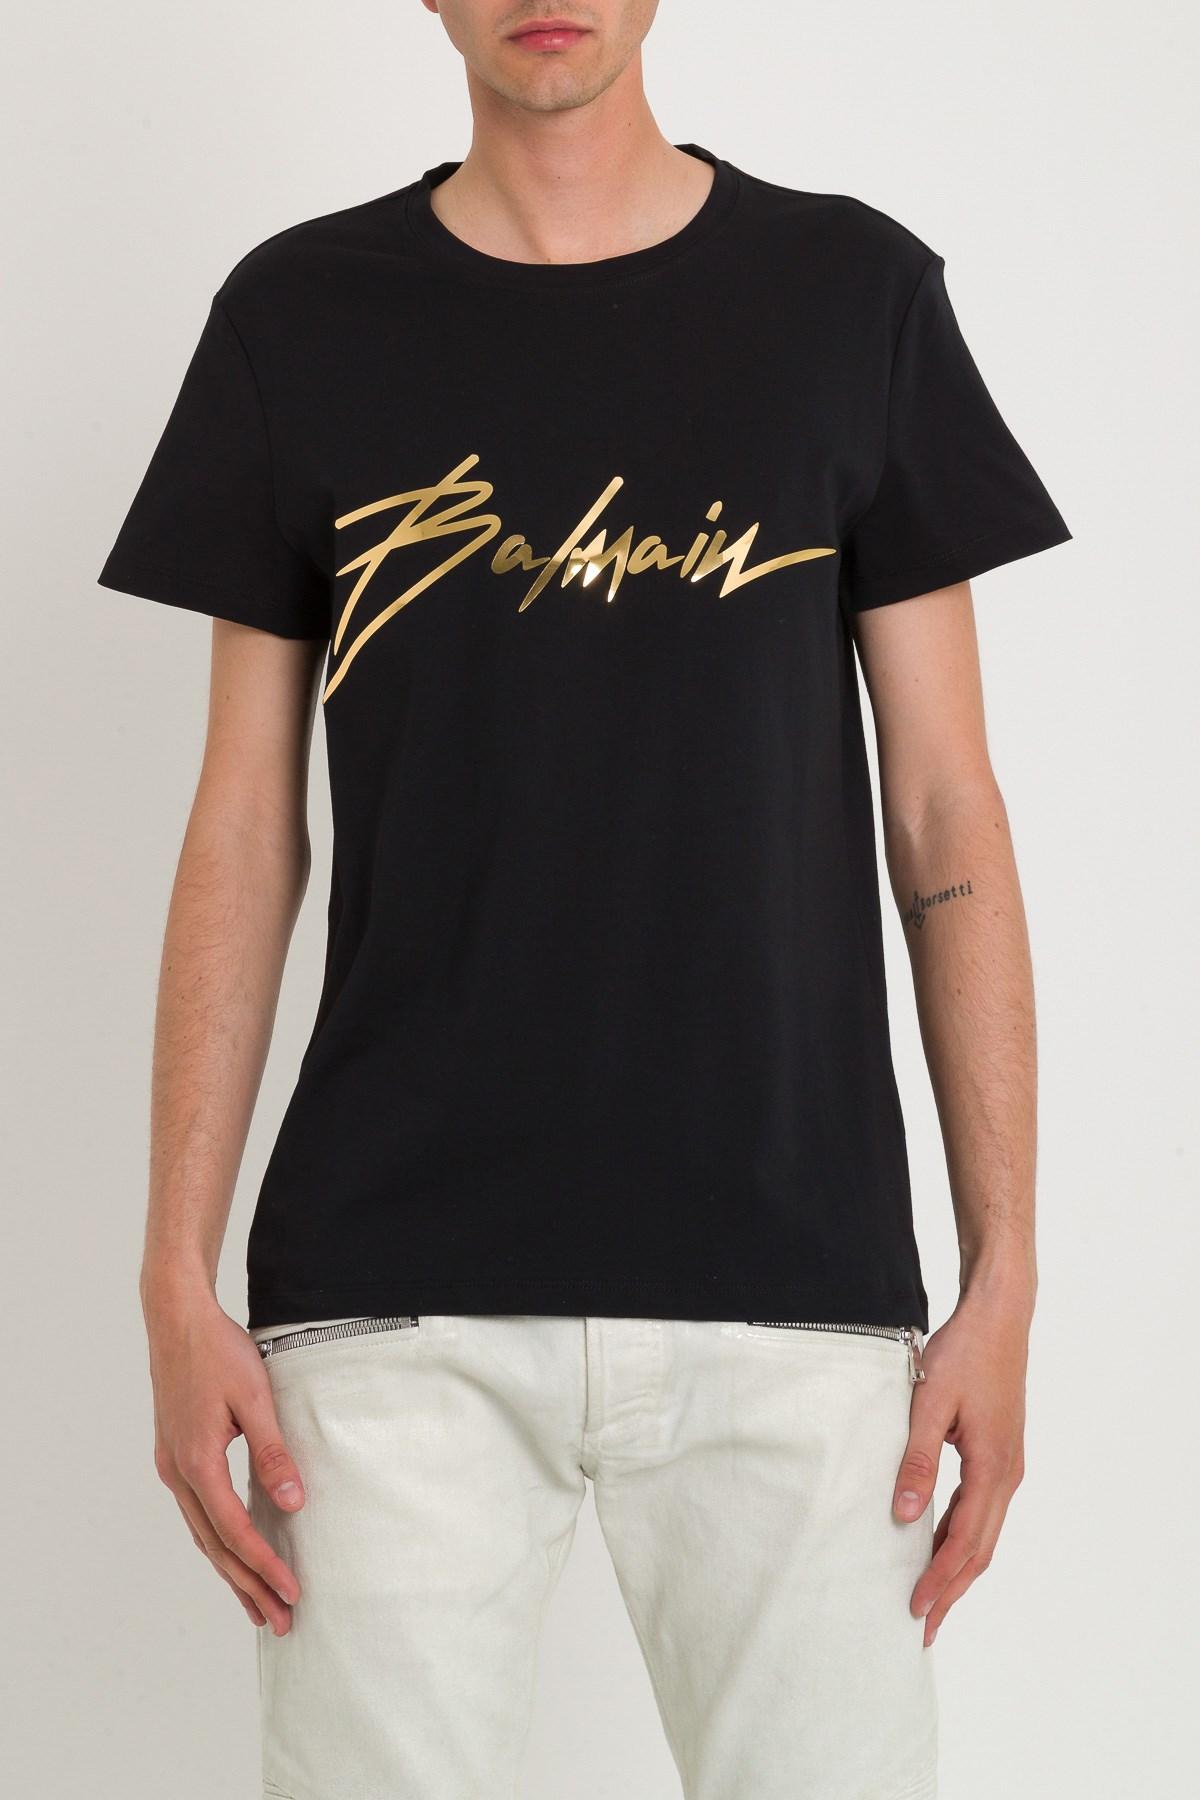 Balmain Signature Logo Cotton T-shirt in Black for Men - Lyst